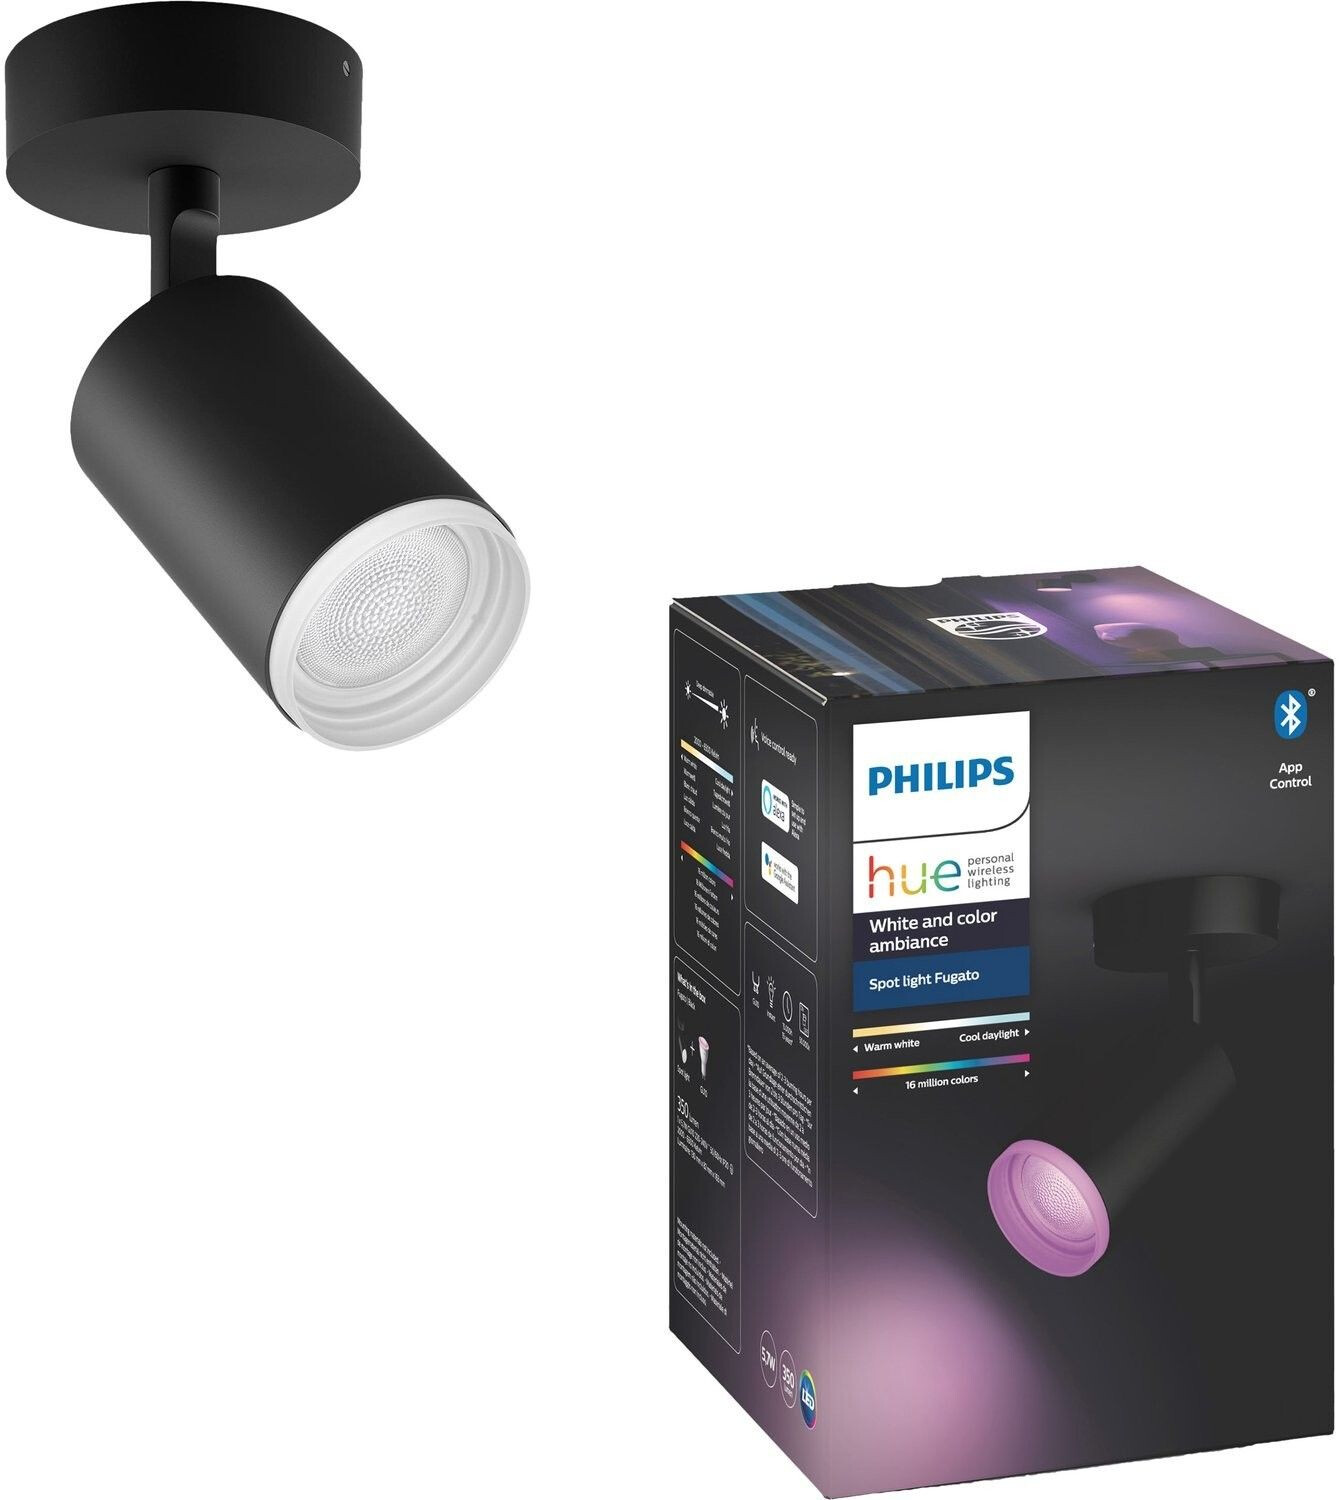 Philips Hue White & Color (50631/30/P7) Preisvergleich ab 76,24 schwarz | Bluetooth bei Ambiance Fugato 1er-Spot €